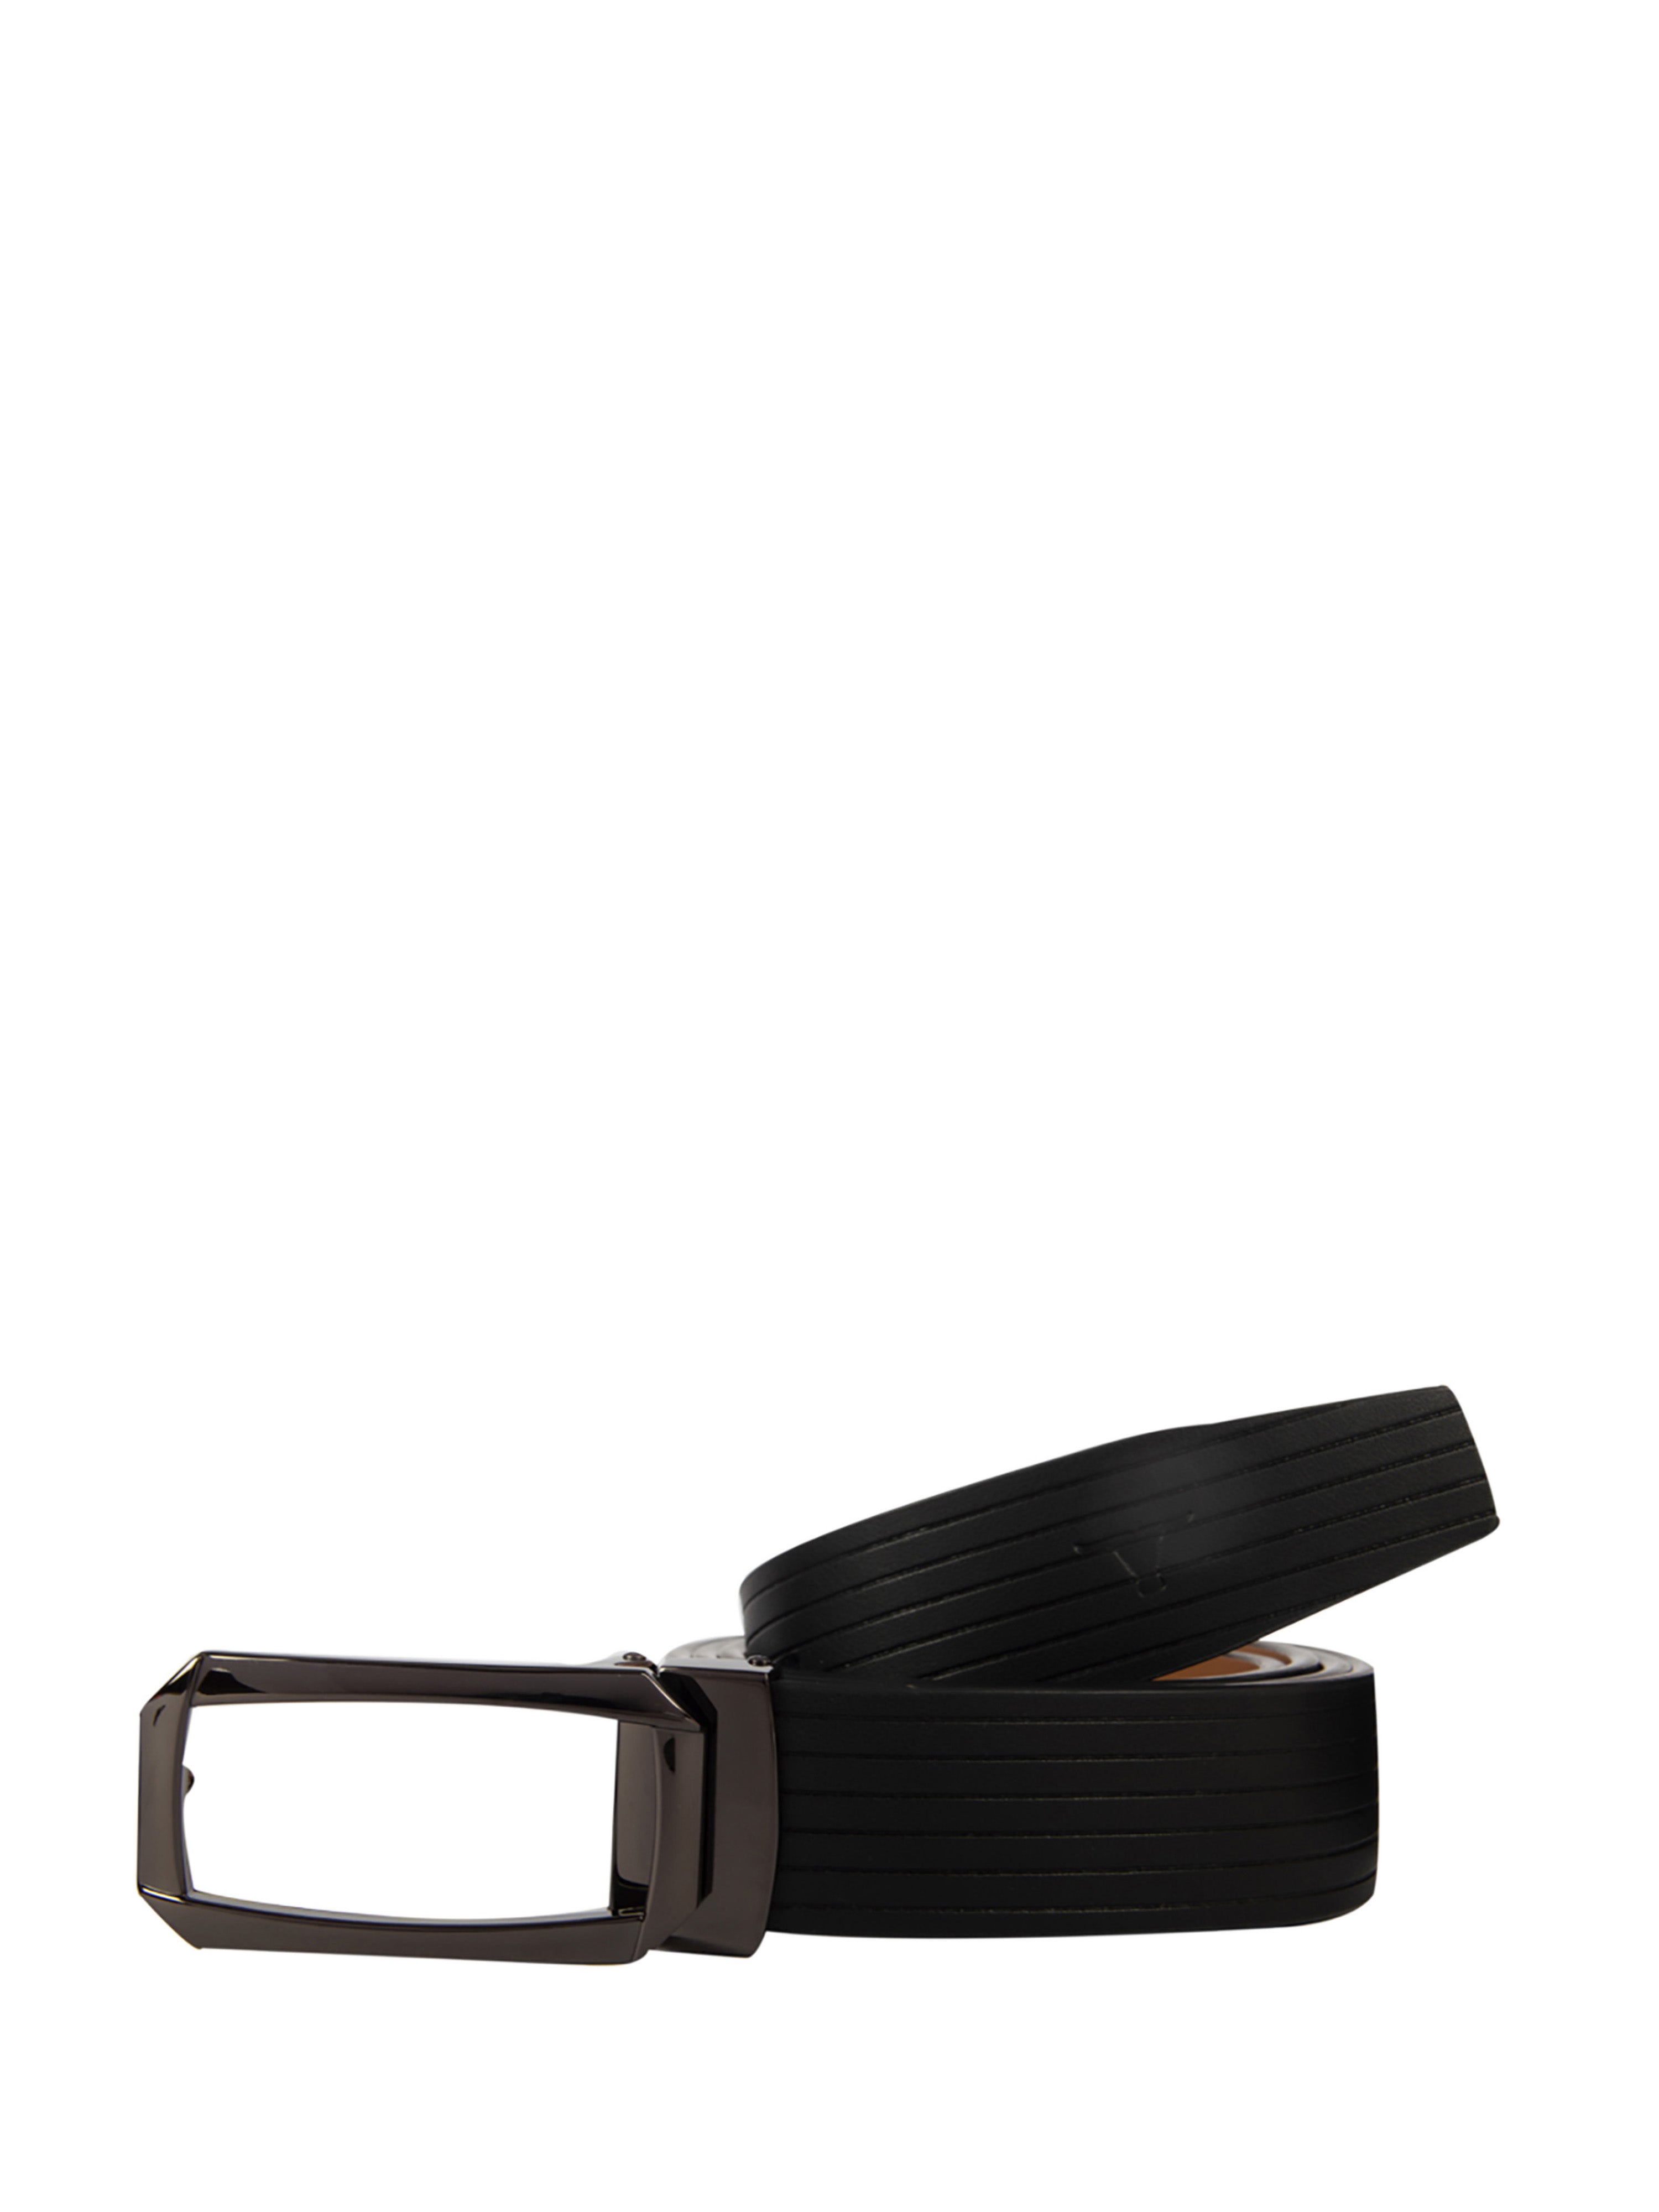 BULCHEE Premium Collection  Men's Leather Belt BUL19903B